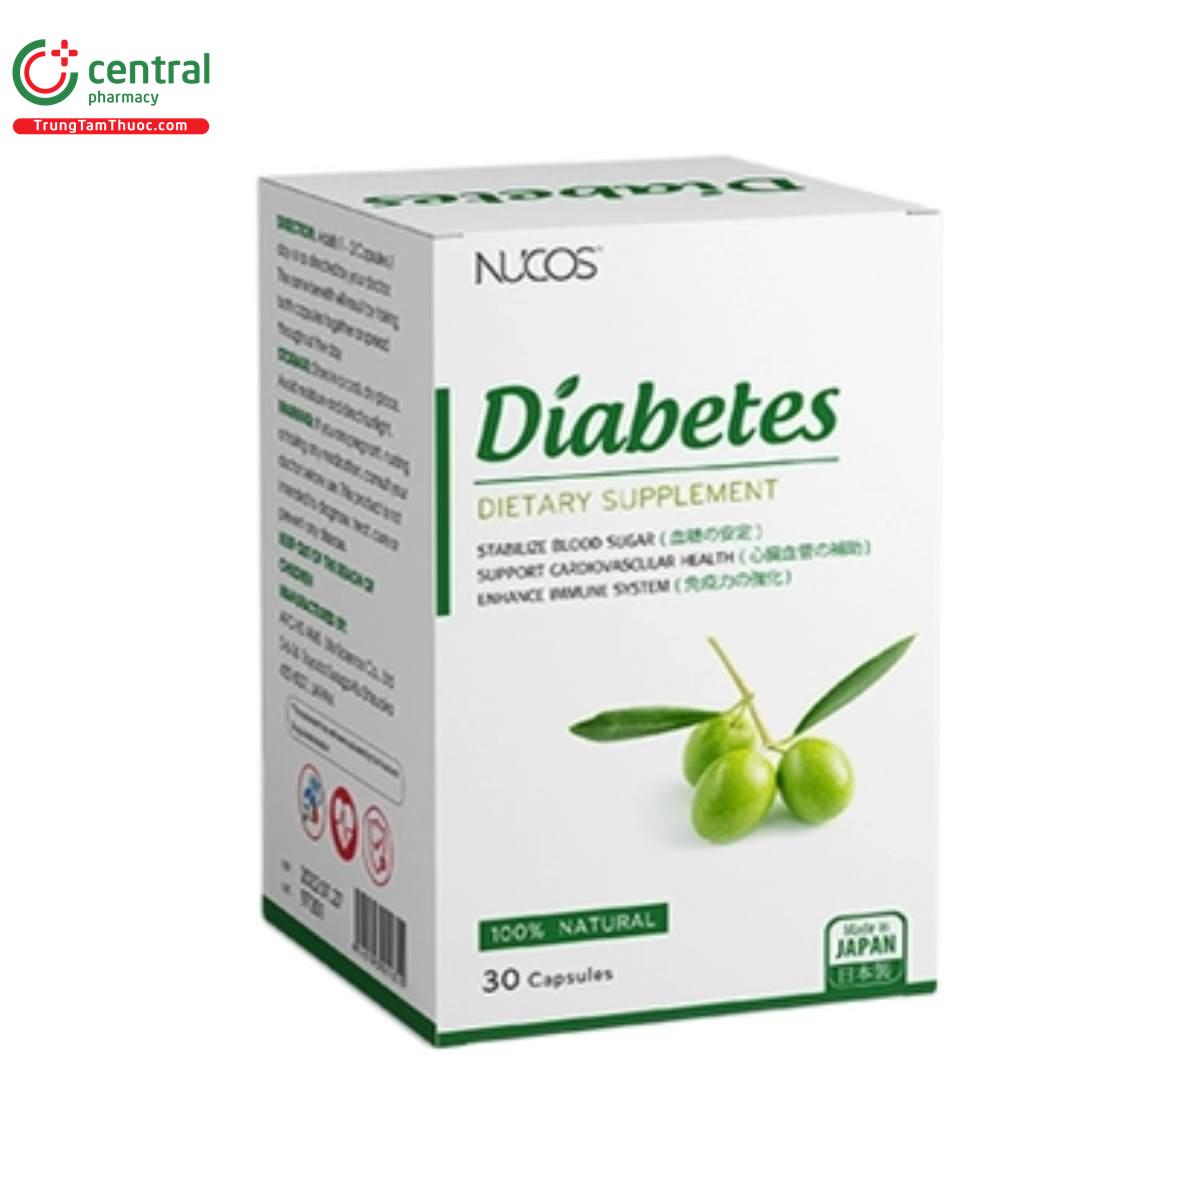 nucos diabetes 4 V8644